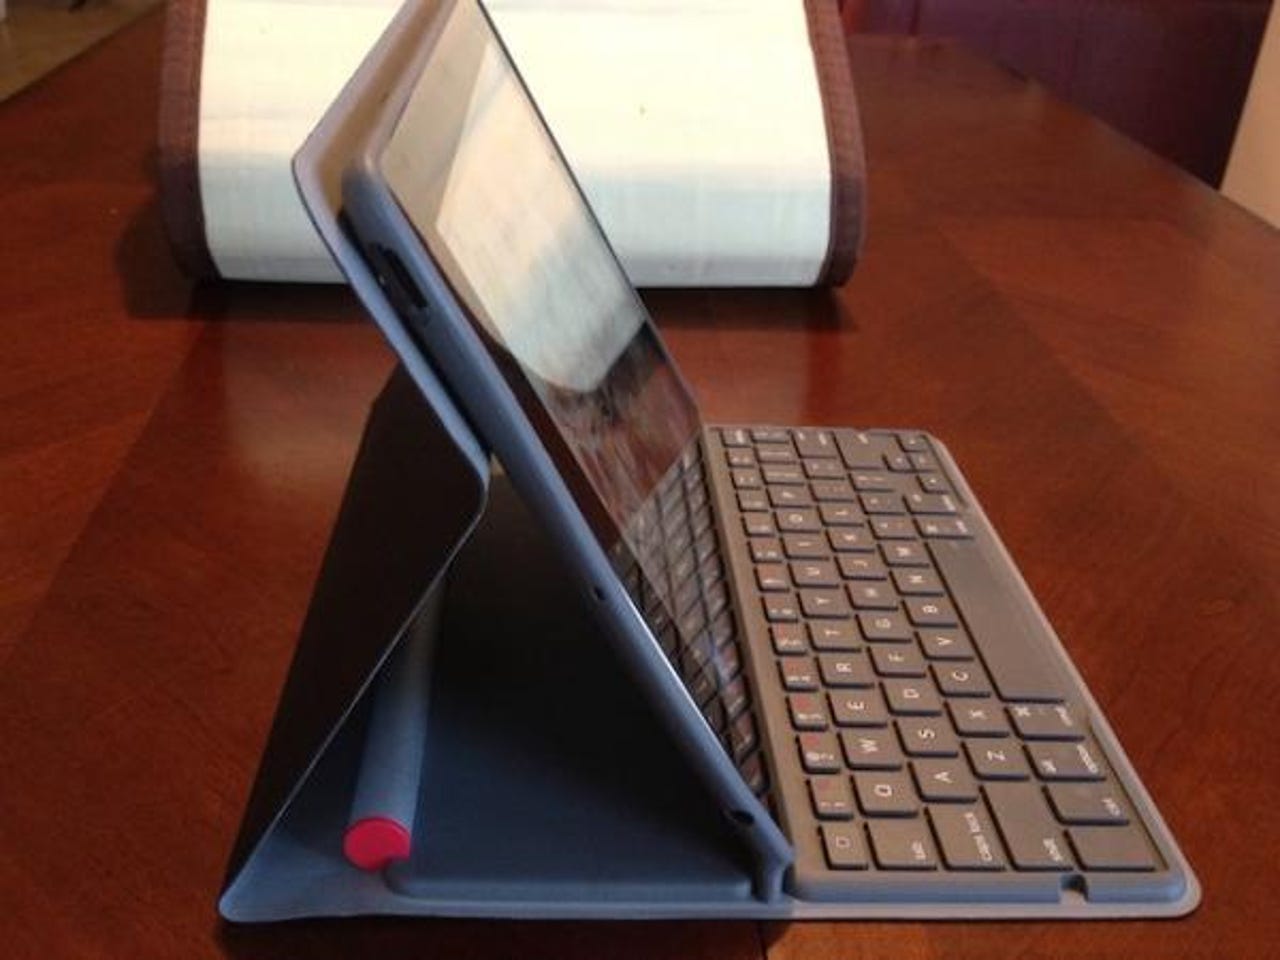 iPad with keyboard folio